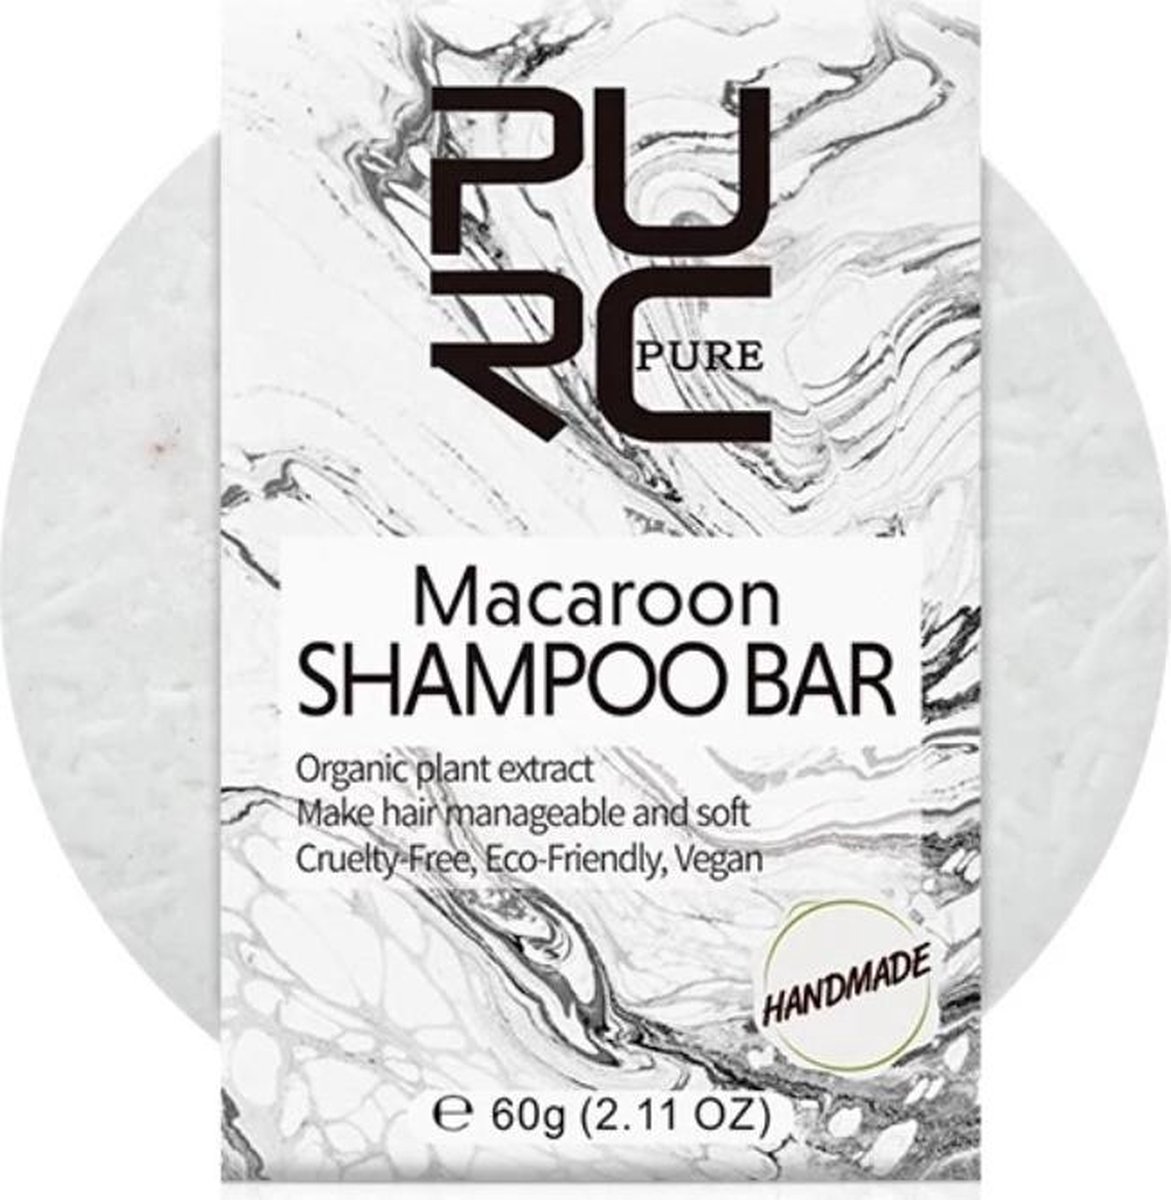 Handmade shampoo bar - Macaroon